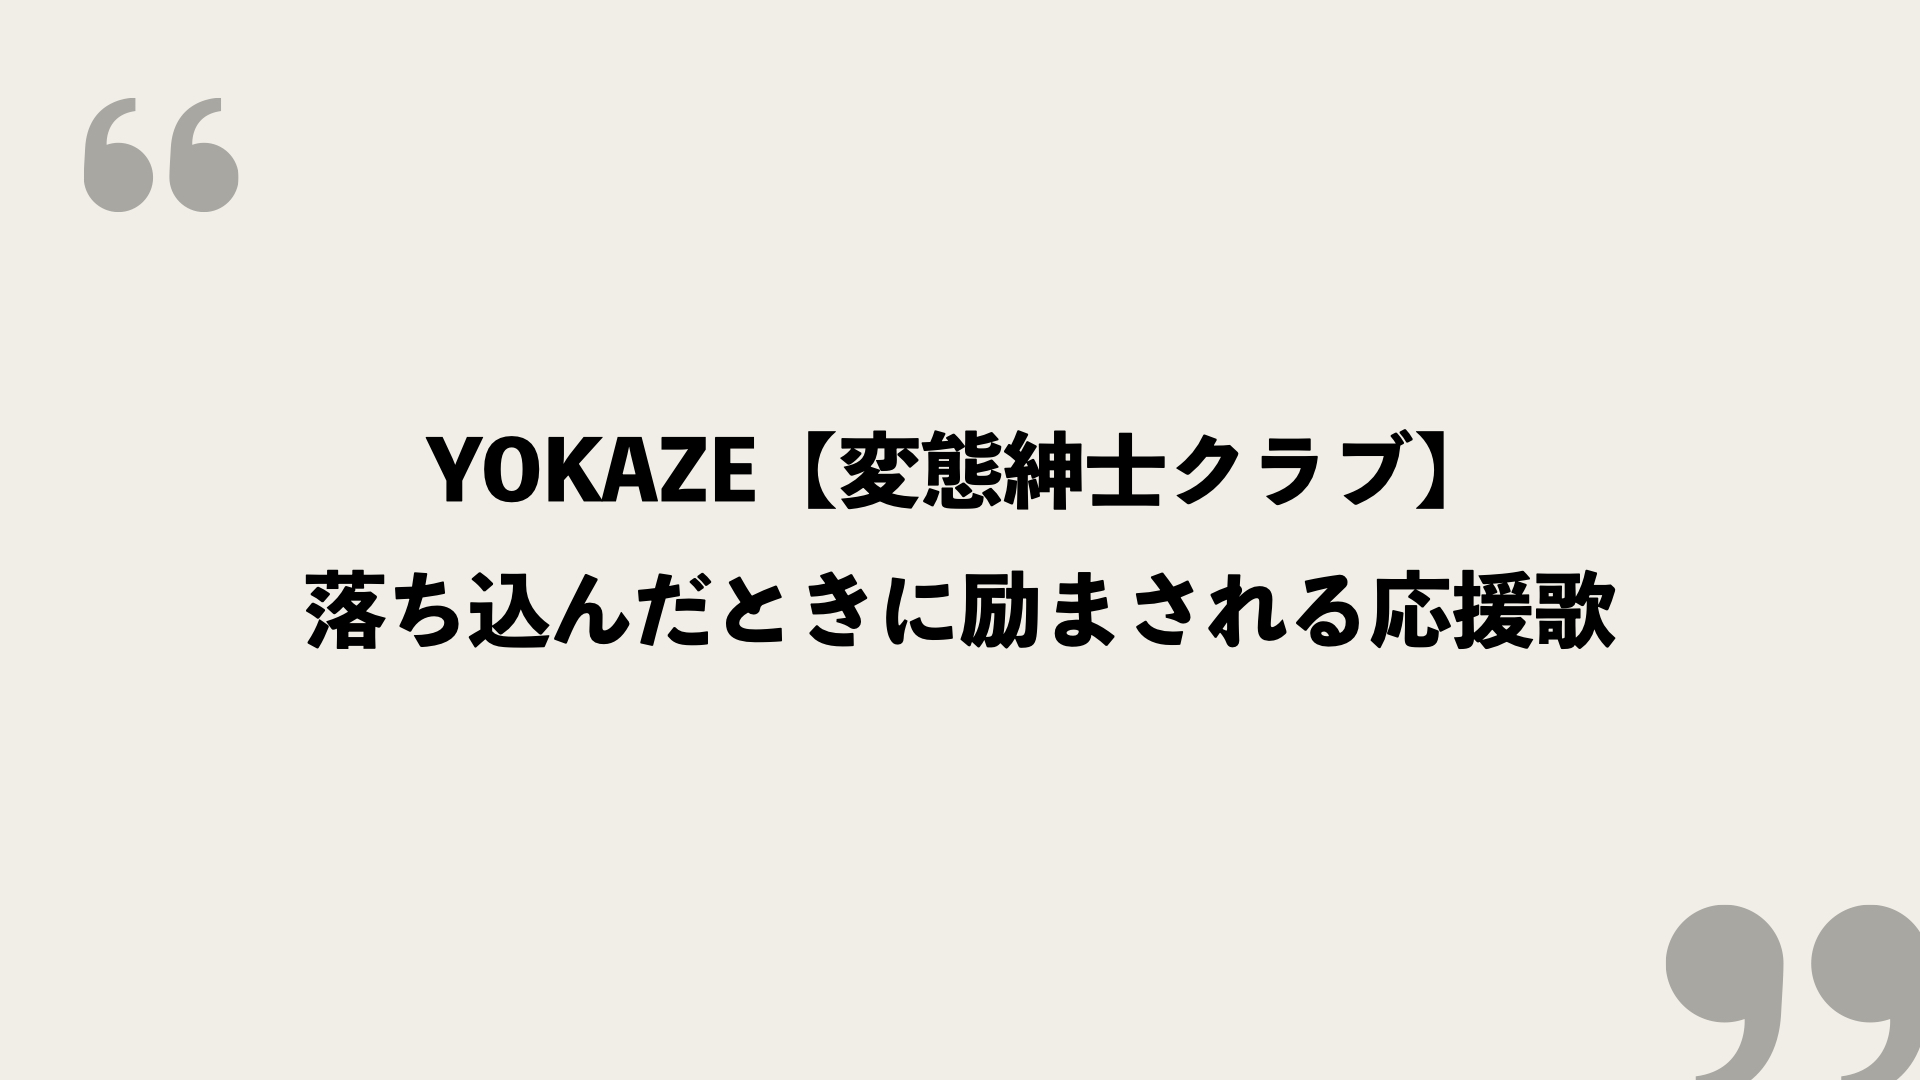 Yokaze 変態紳士クラブ 歌詞の意味を考察 落ち込んだときに励まされる応援歌 Framu Media